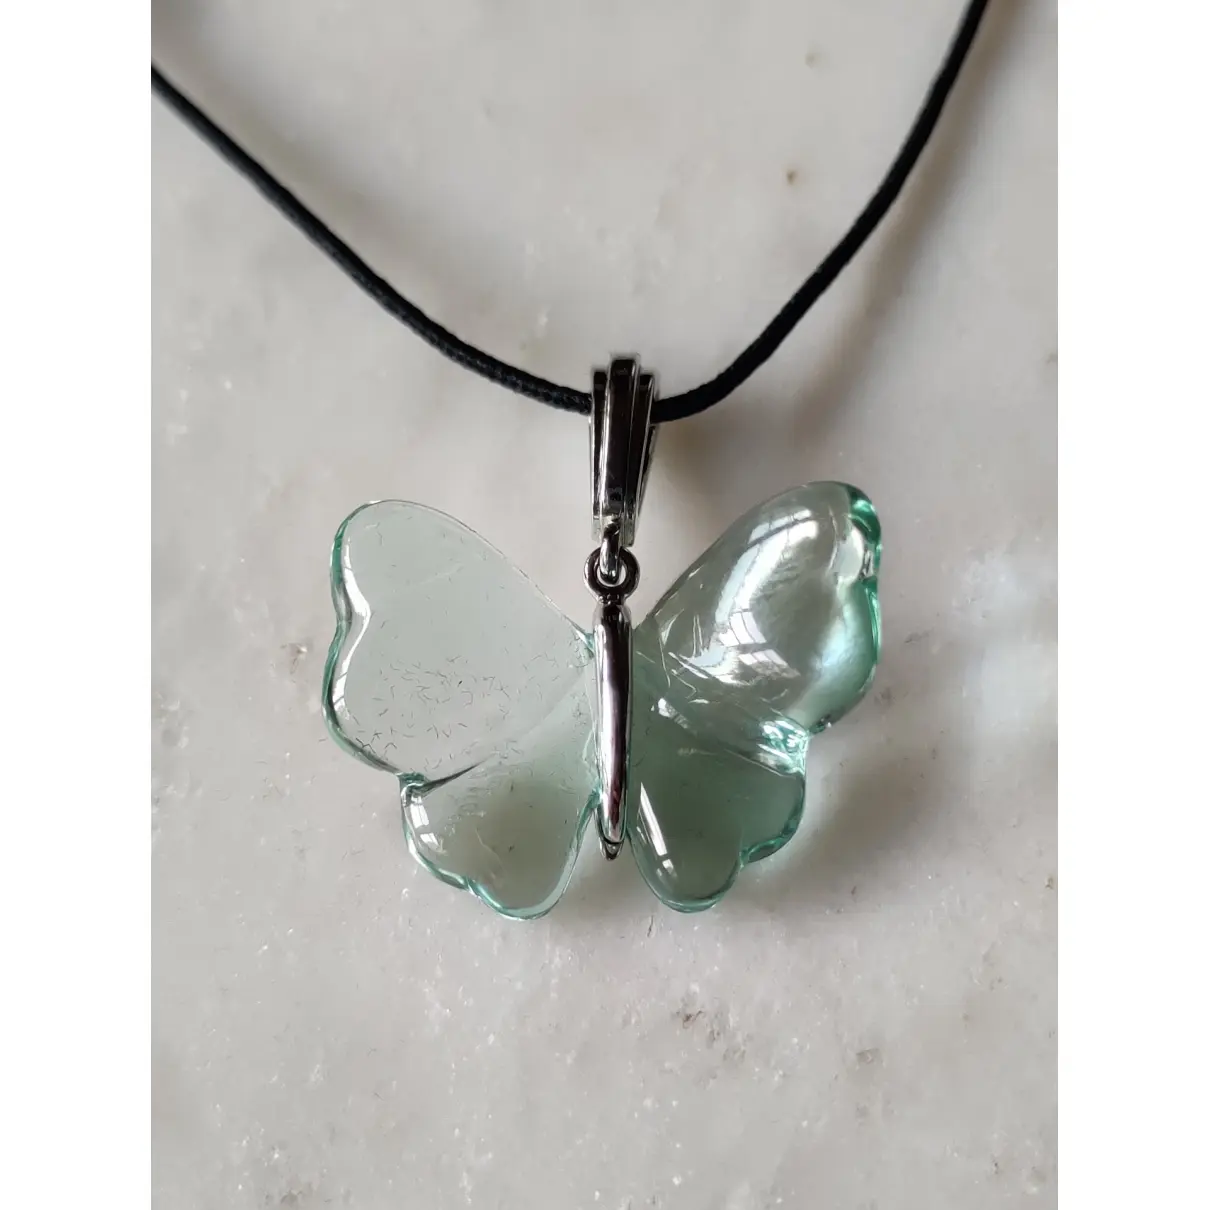 Buy Lalique Crystal necklace online